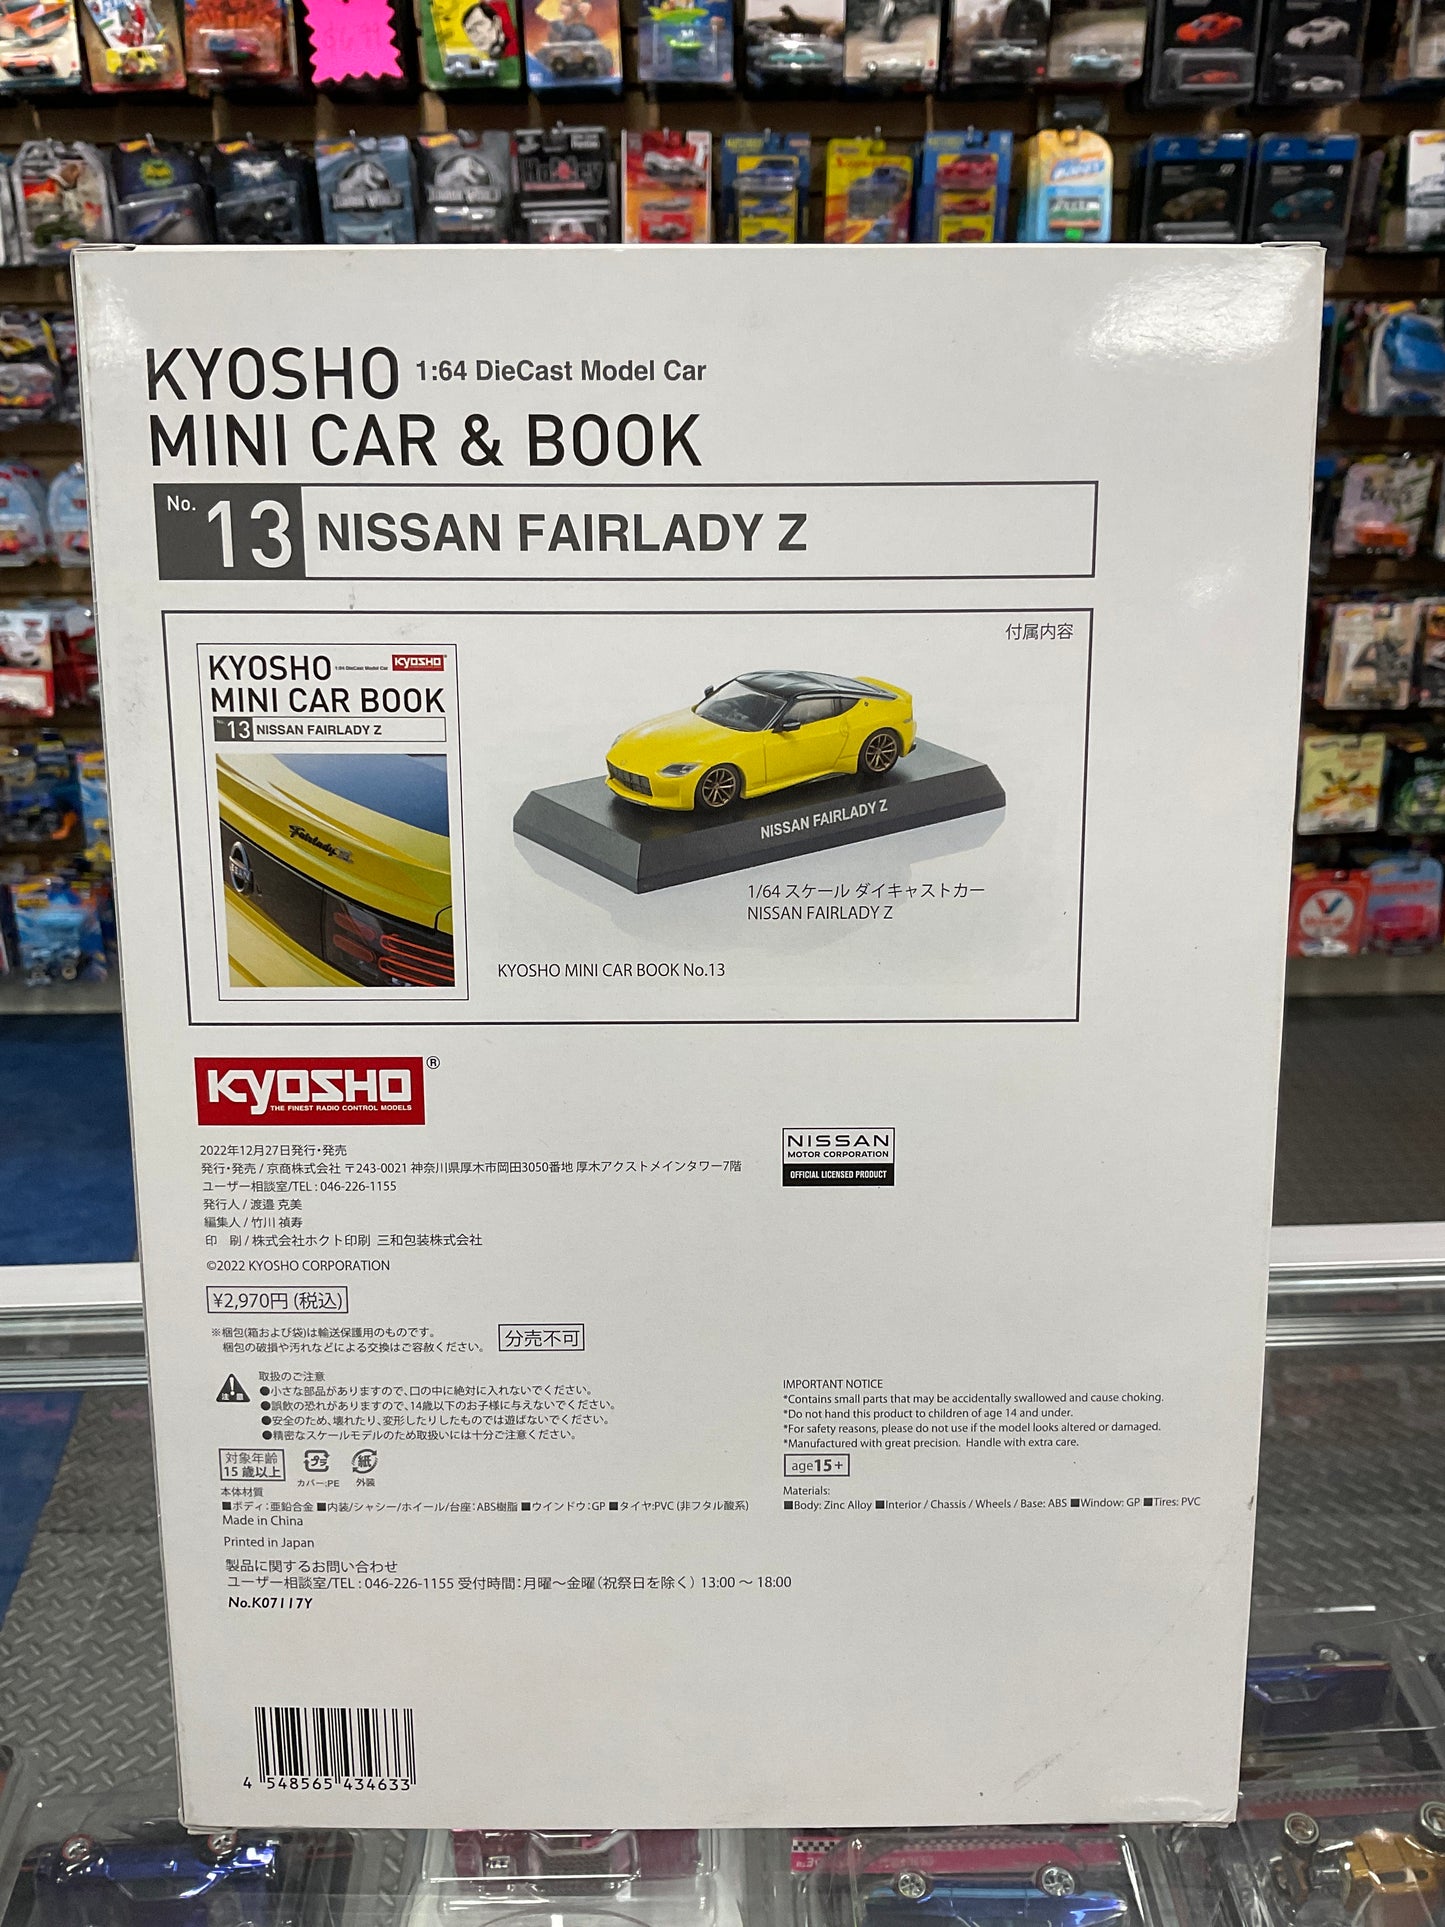 Kyosho mini book & car set #13 Nissan Fairlady Z yellow